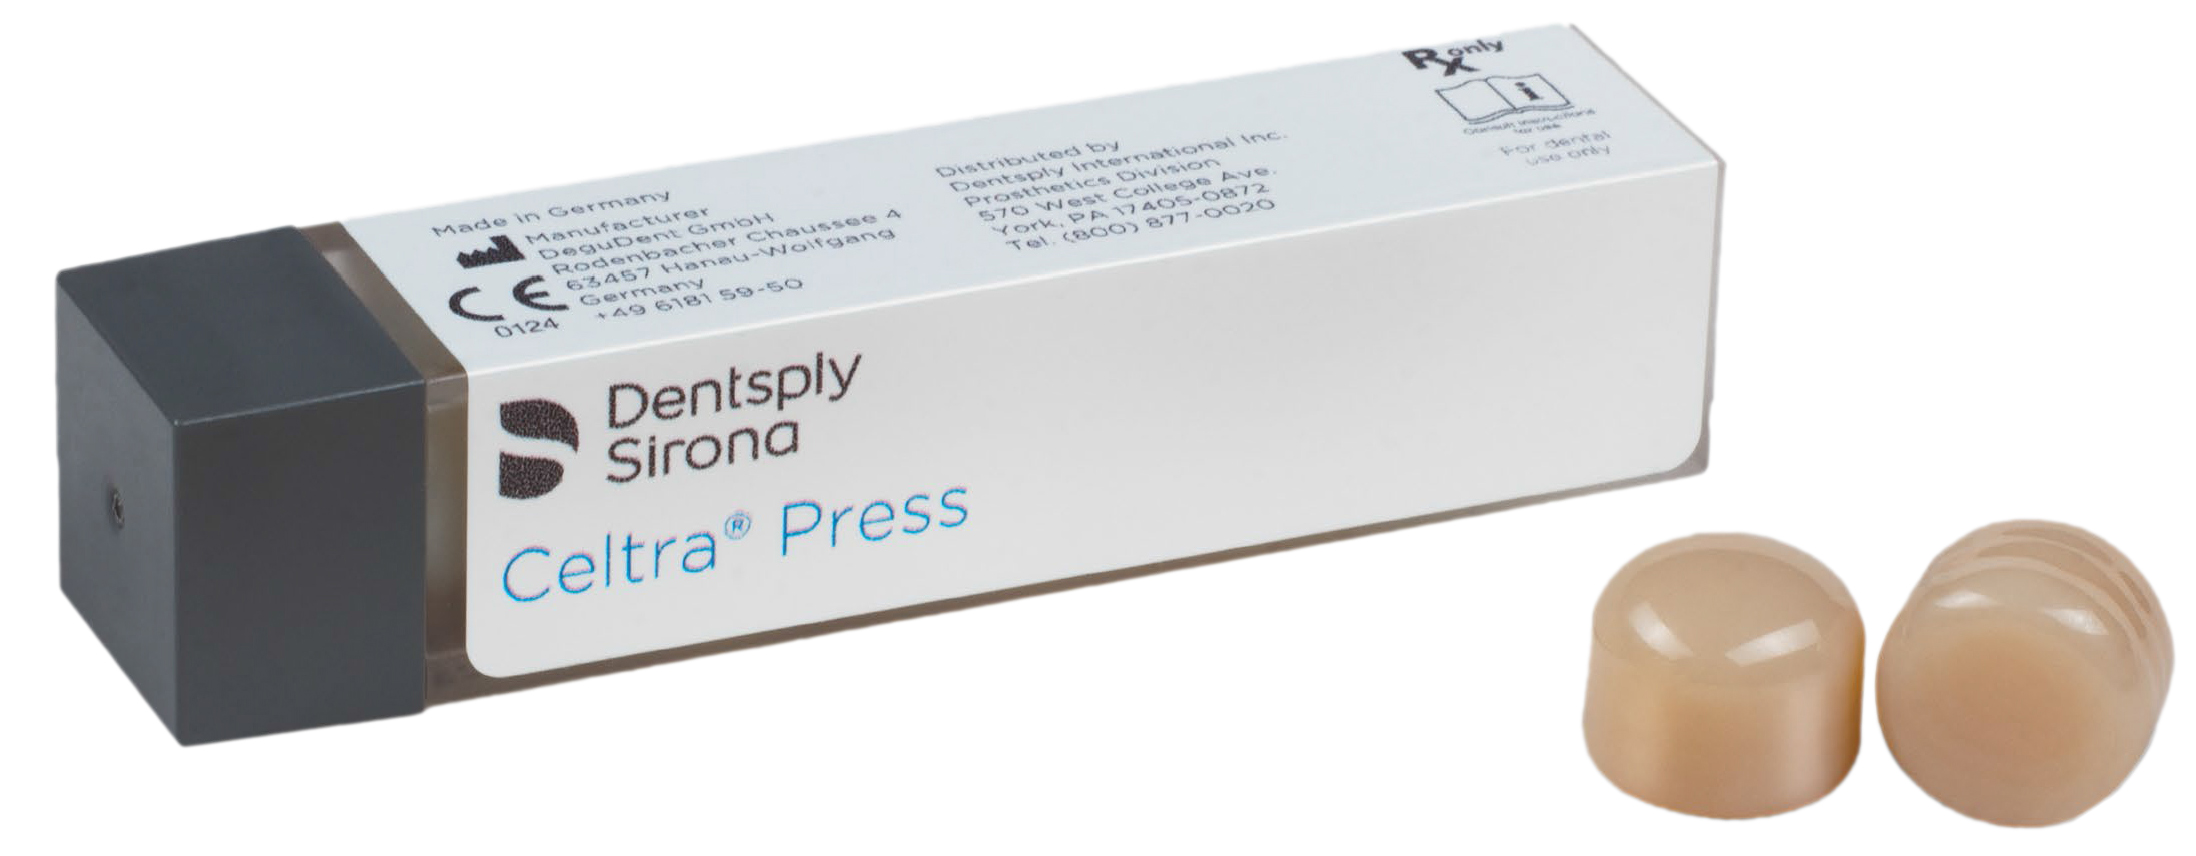 Заготовки Celtra Press MO средняя опаковость (5х3 г) Dentsply Sirona